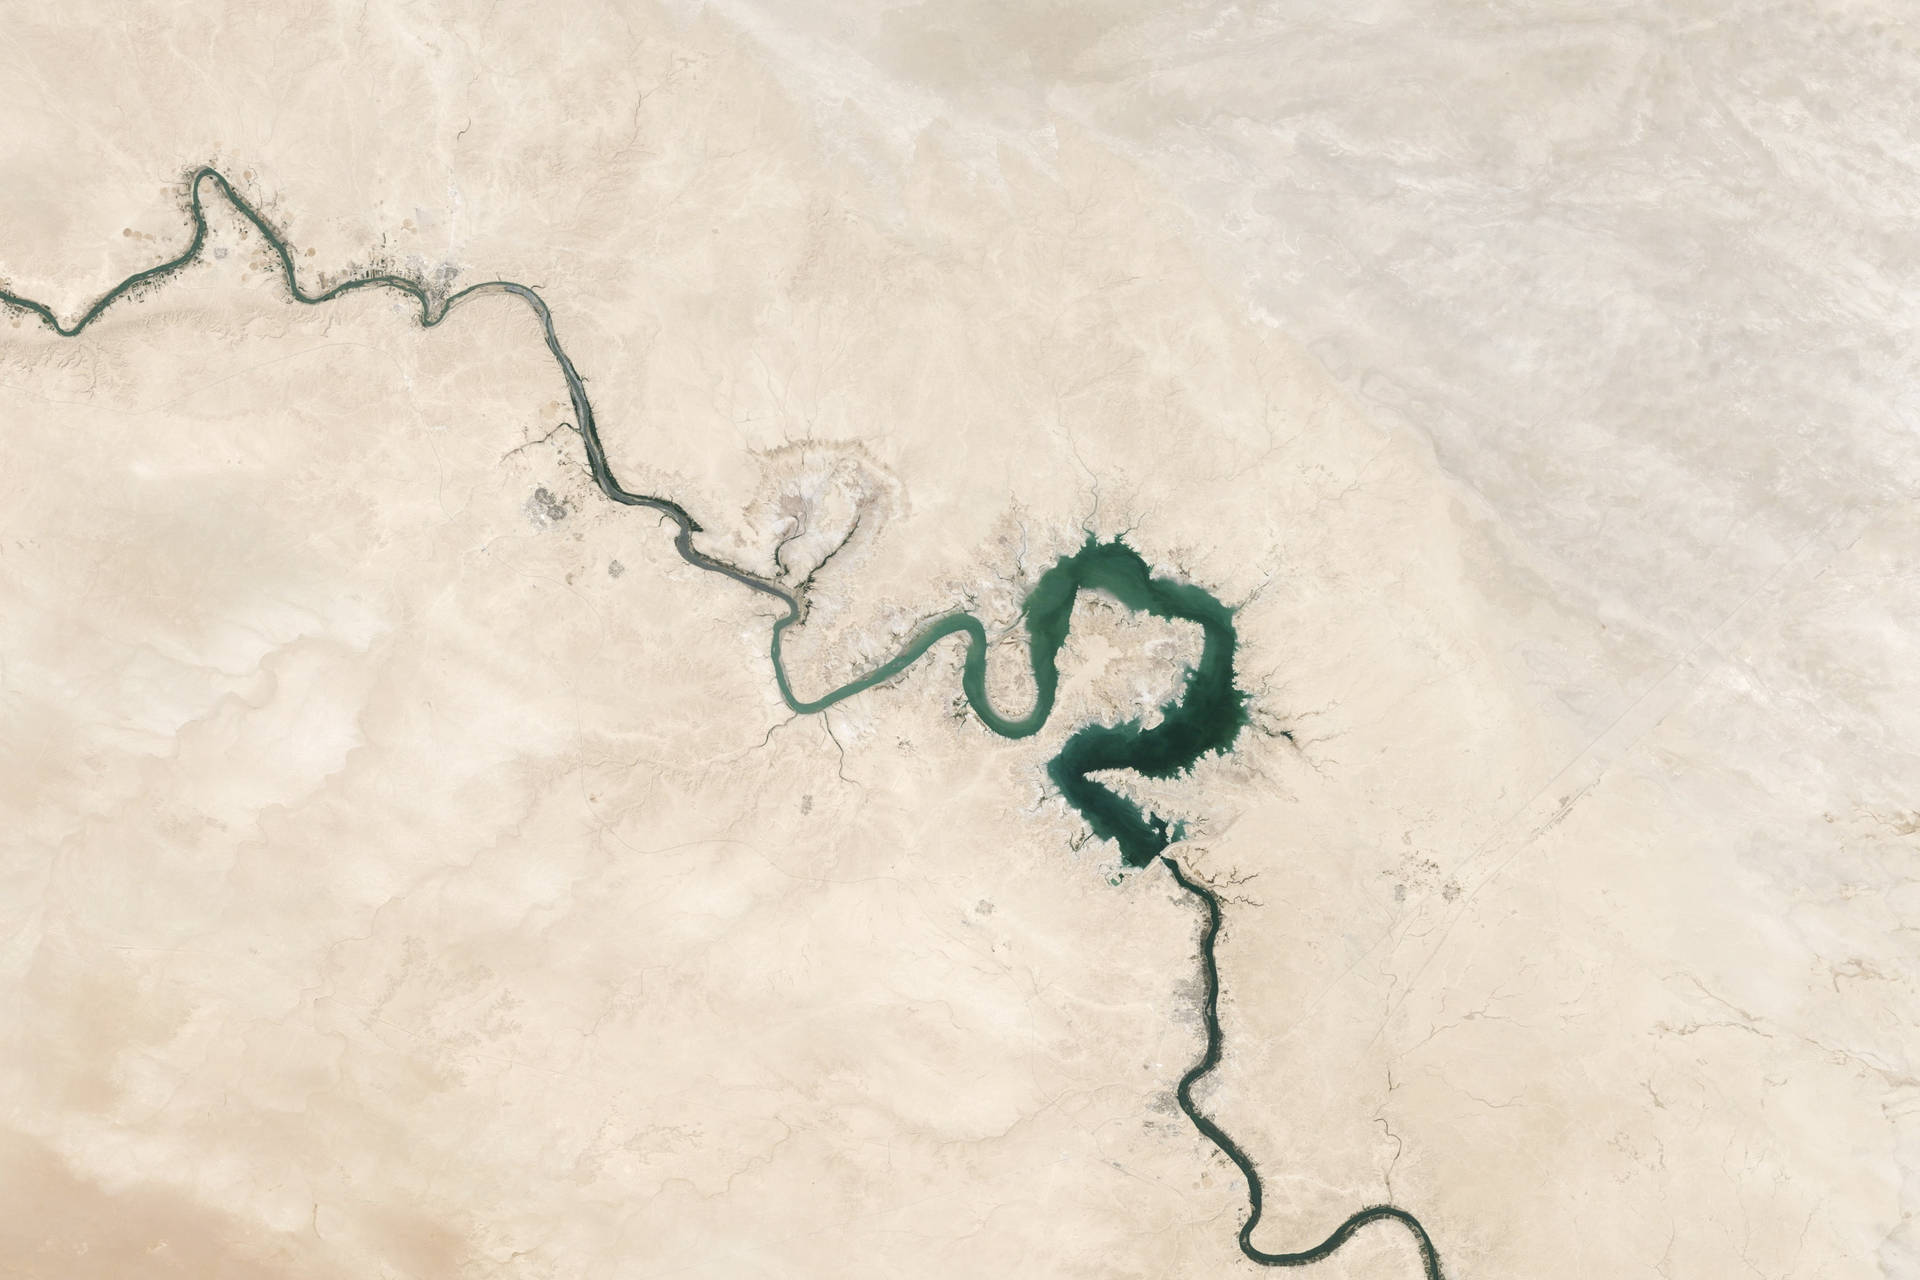 Iraq Euphrates River Illustration